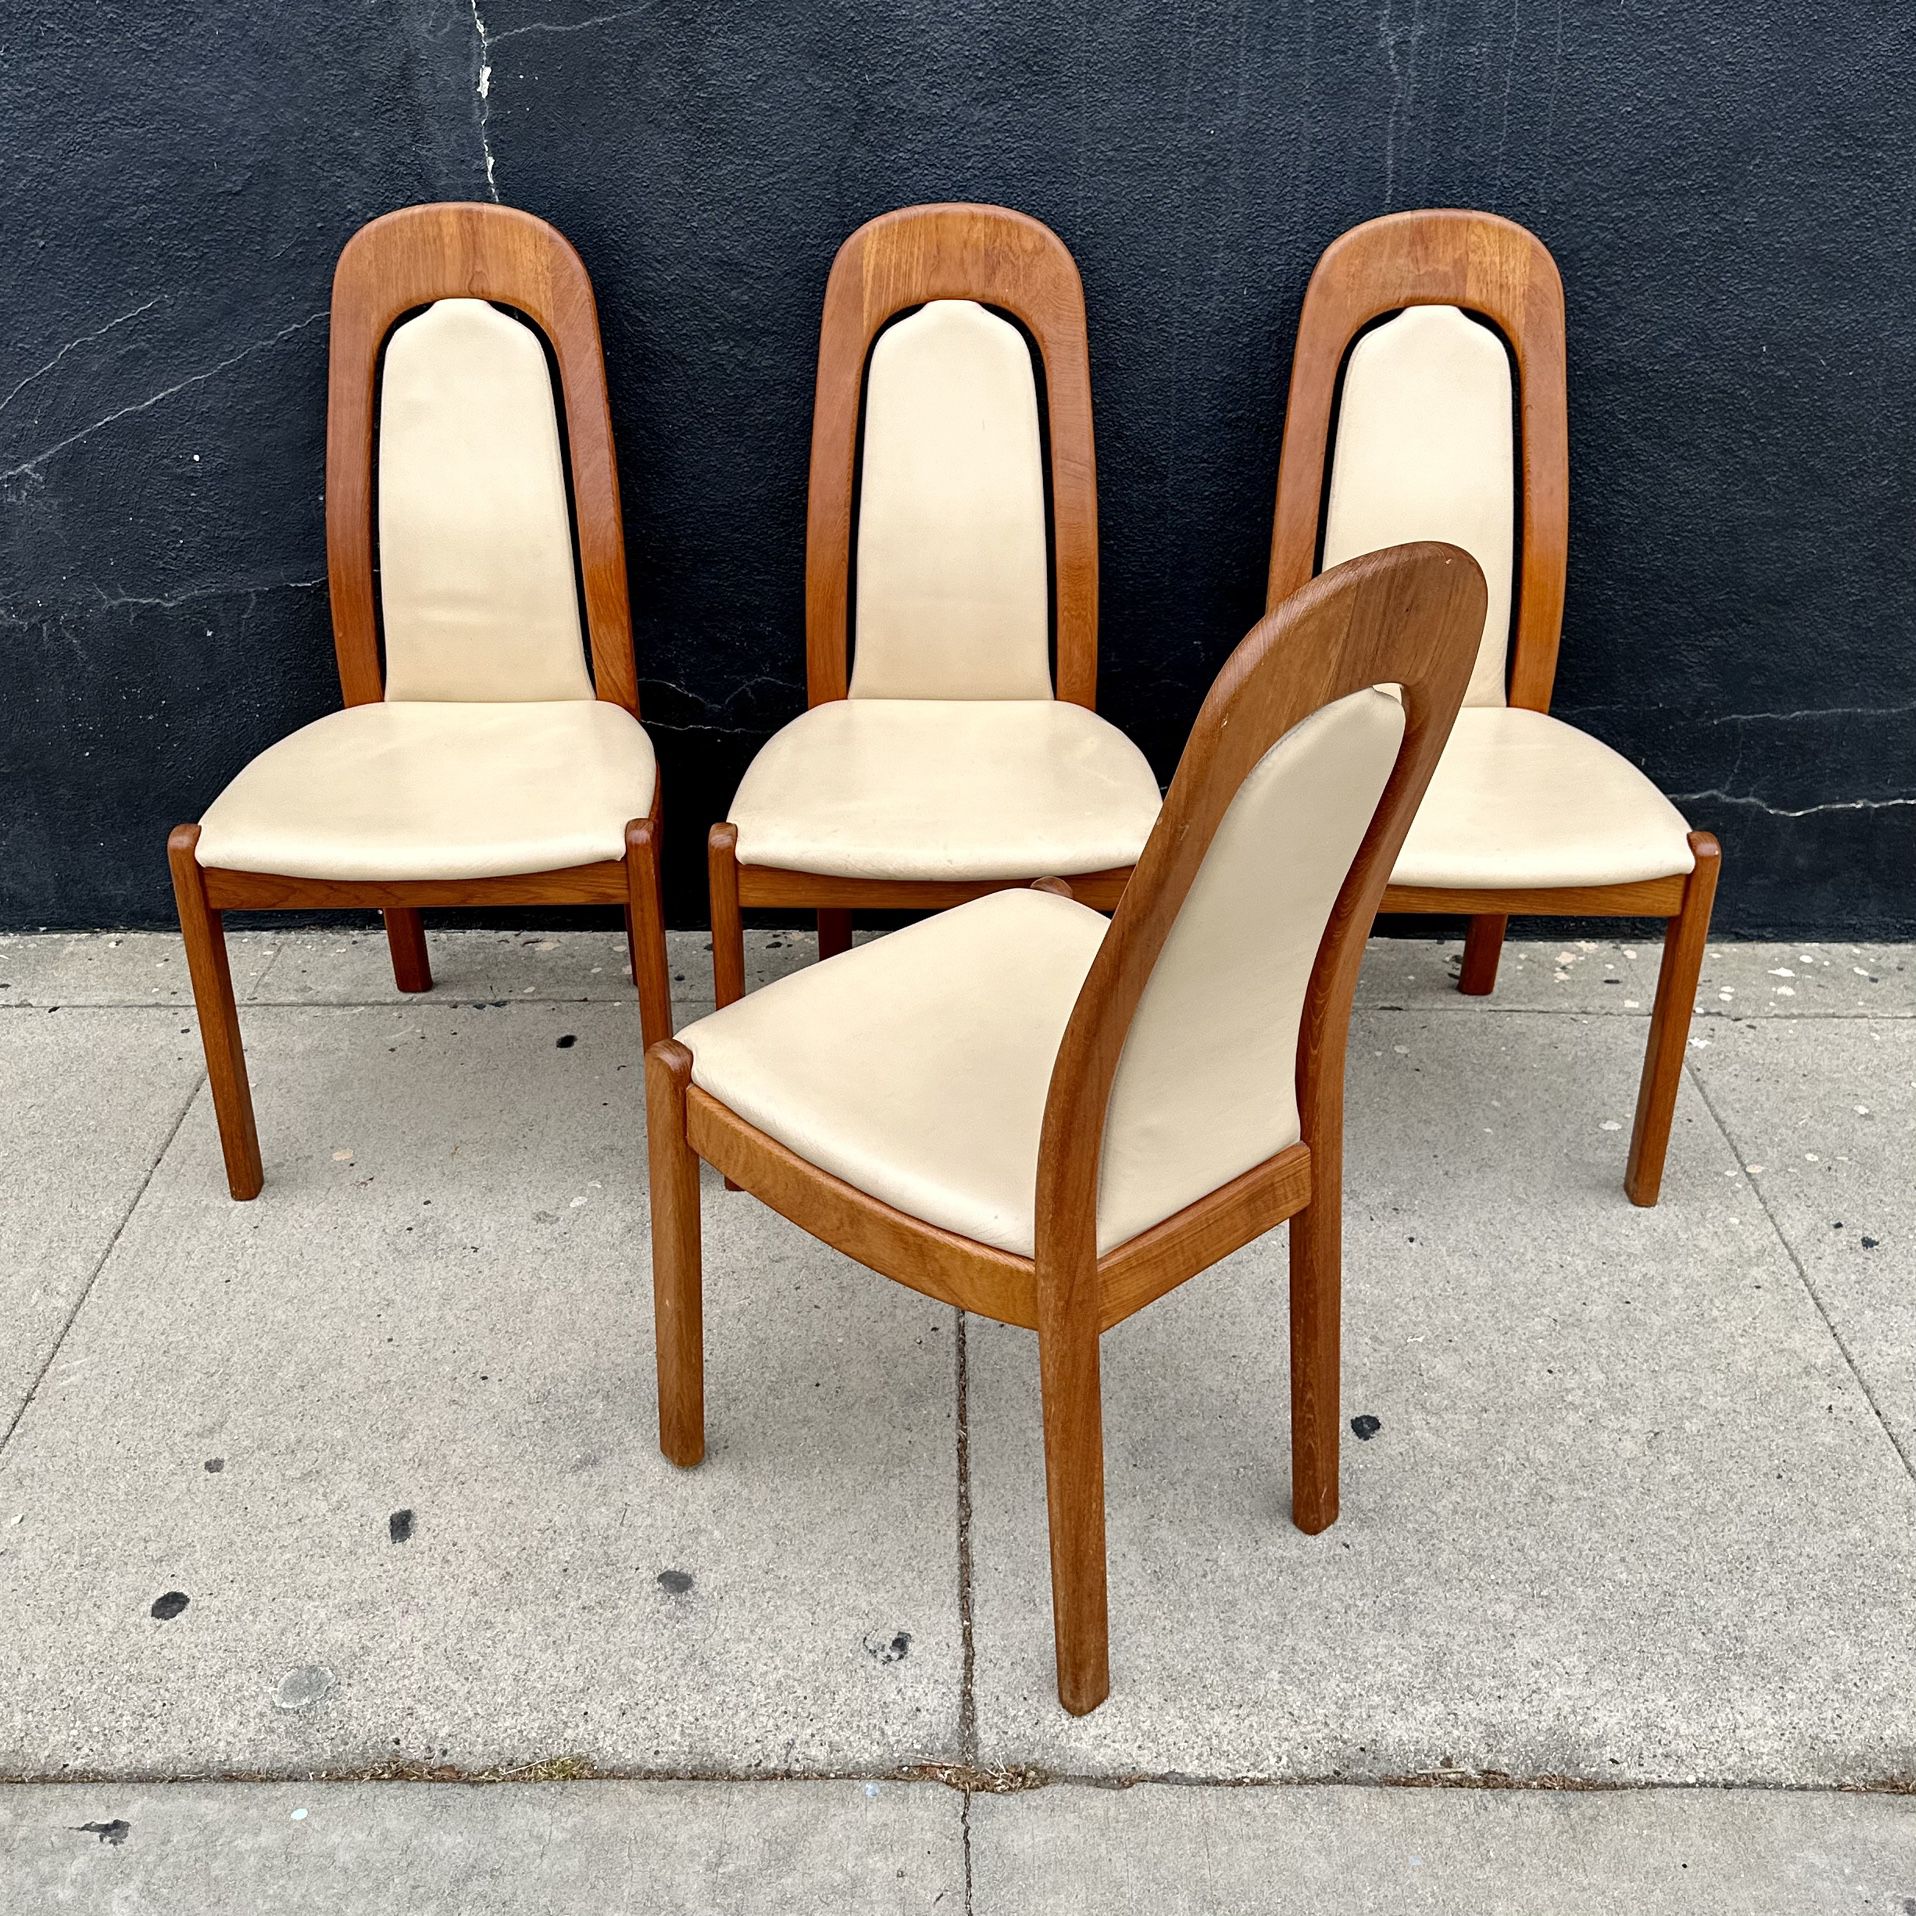 Vintage Danish Modern High Back Teak Dining Chairs